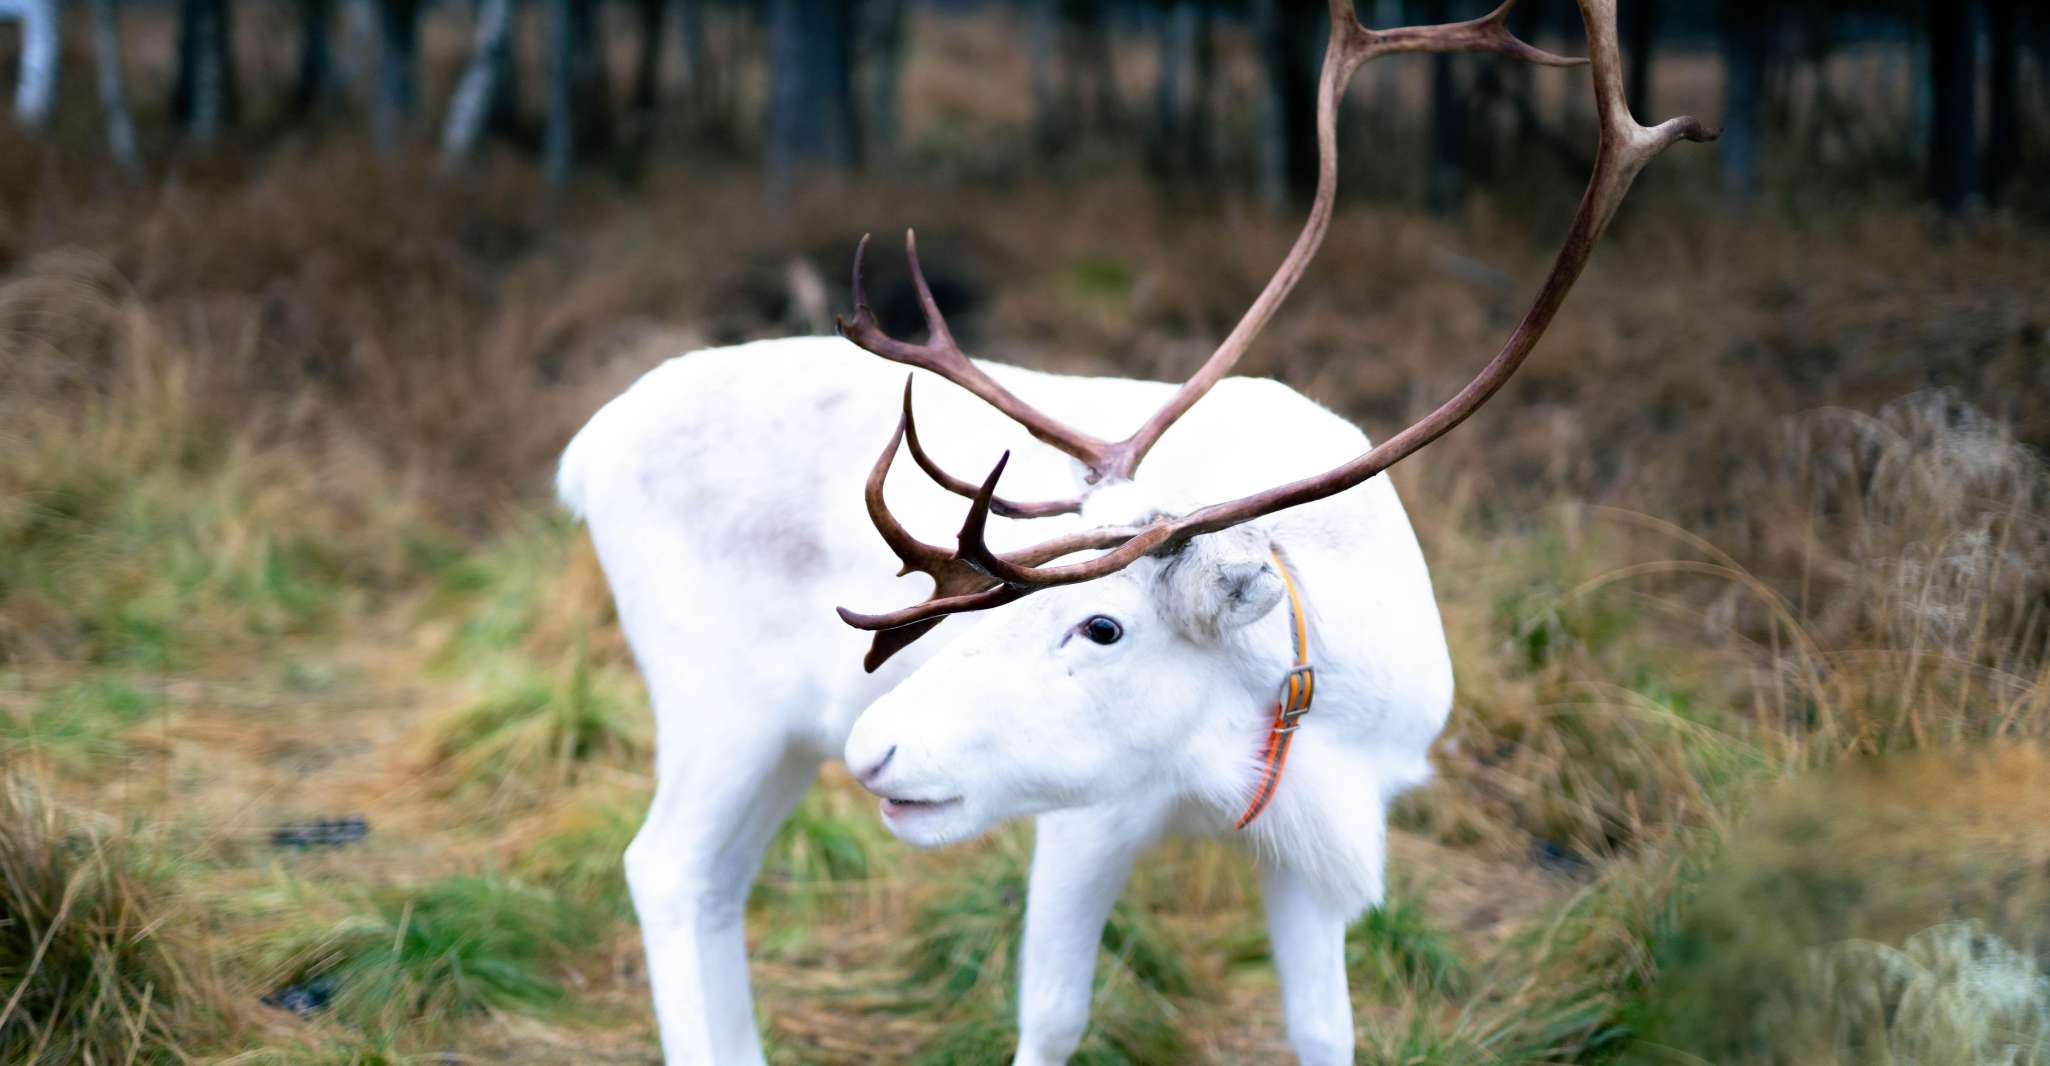 Helsinki reindeer farm visit with photos - Housity